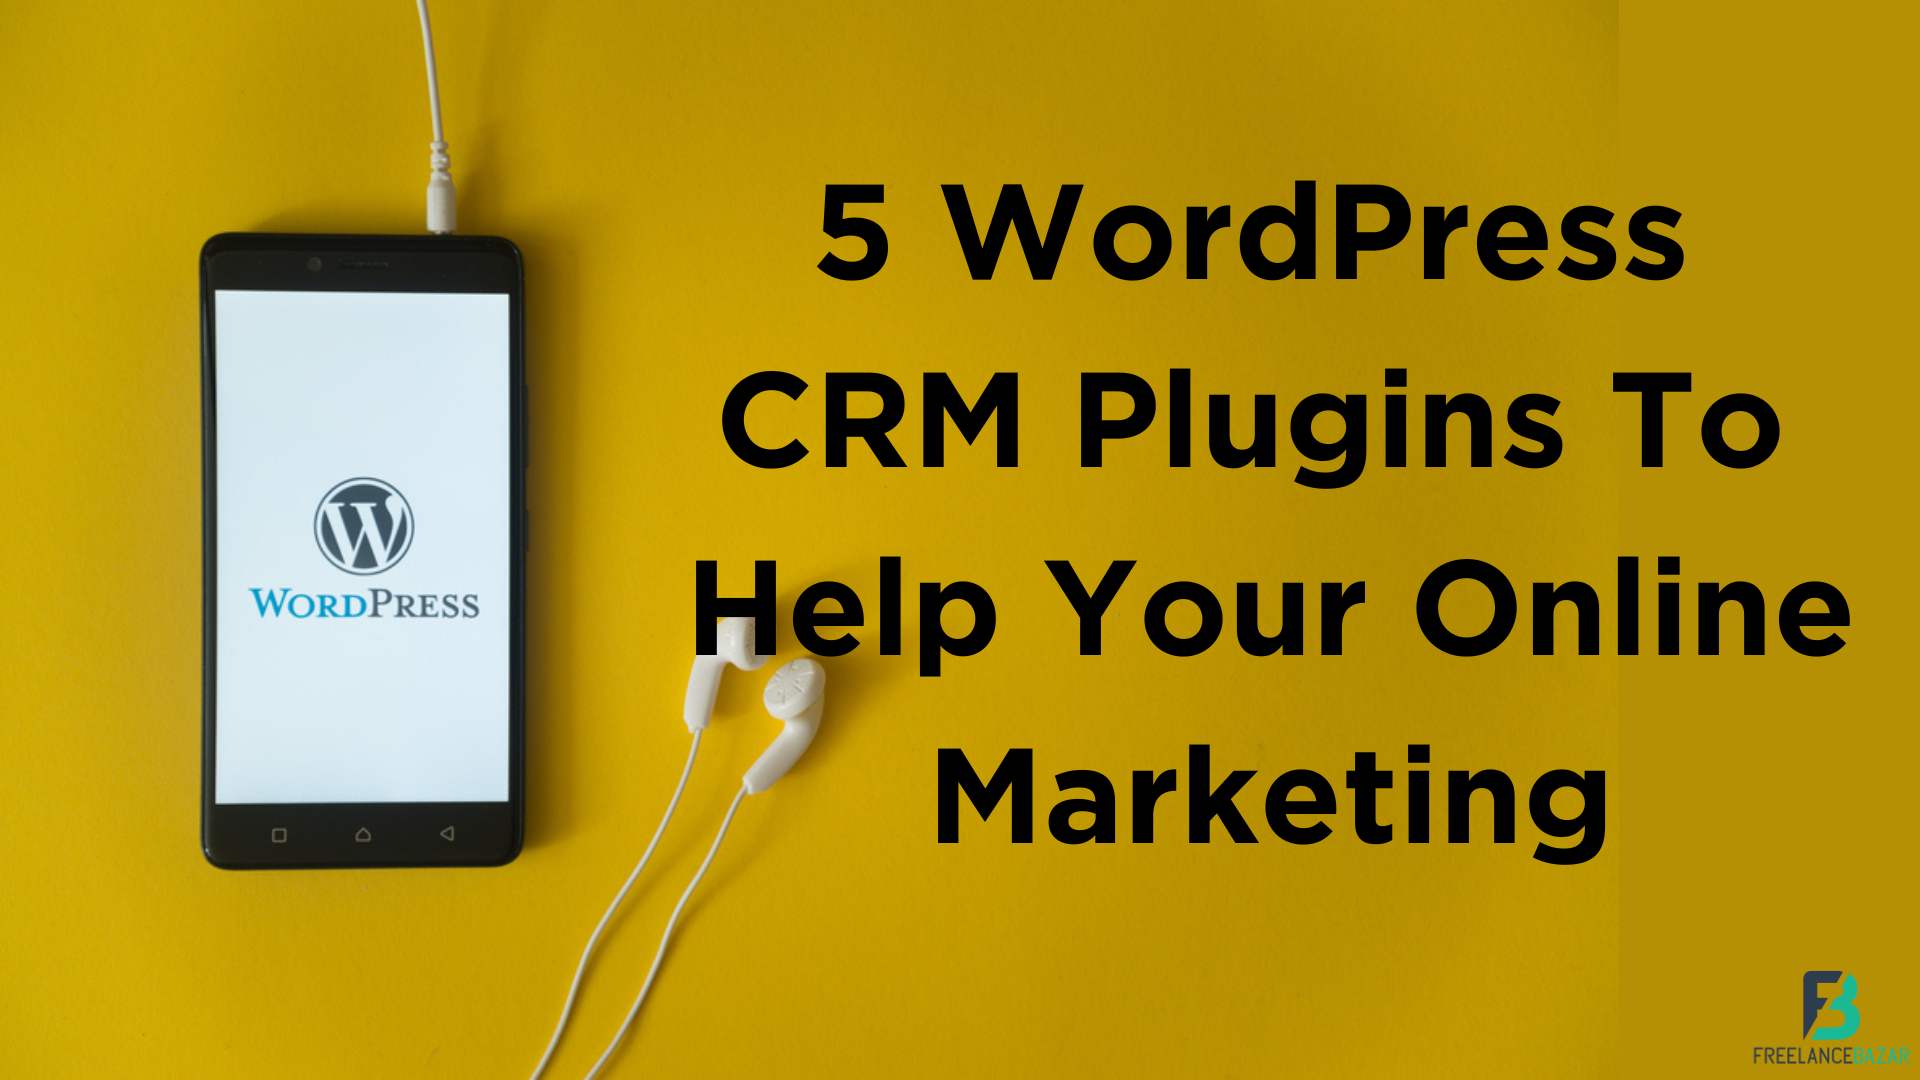 5 WordPress CRM Plugins To Help Your Online Marketing